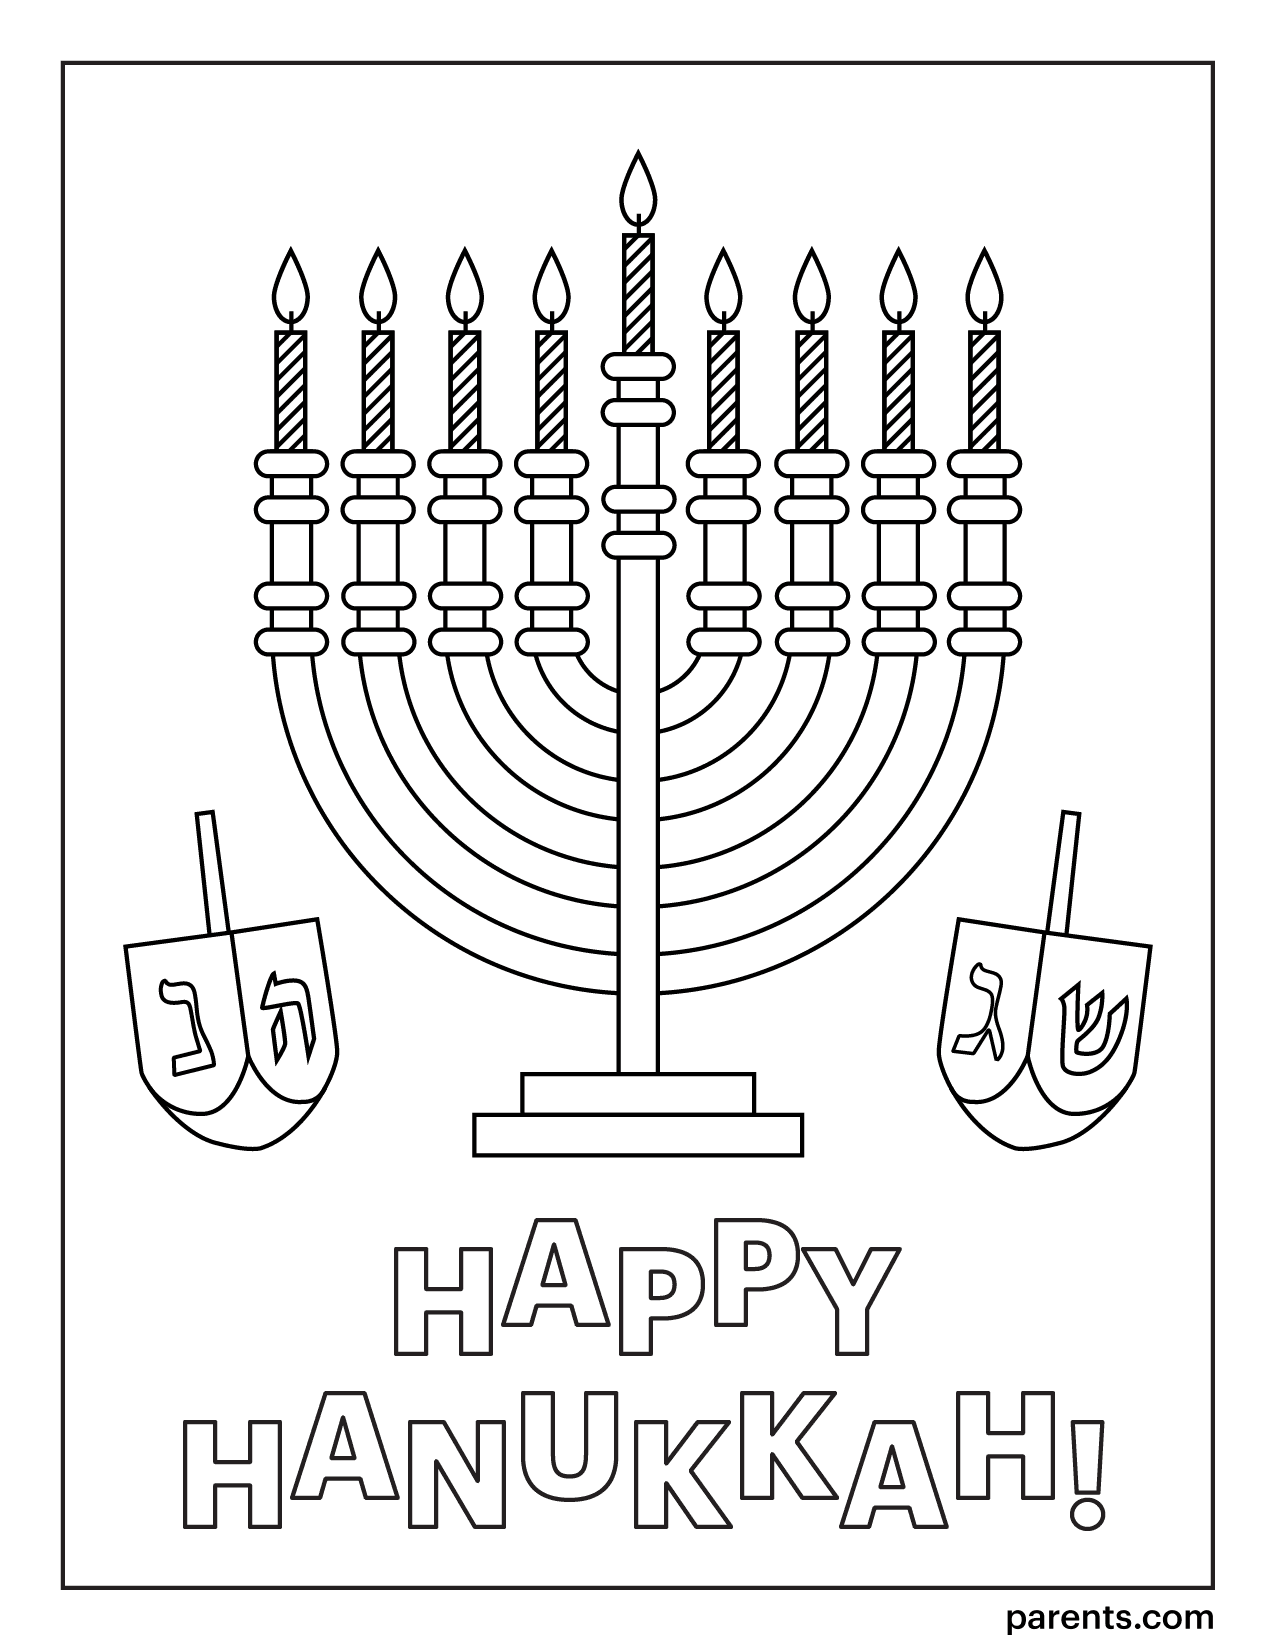 20 Printable Hanukkah Coloring Pages for Kids   Parents